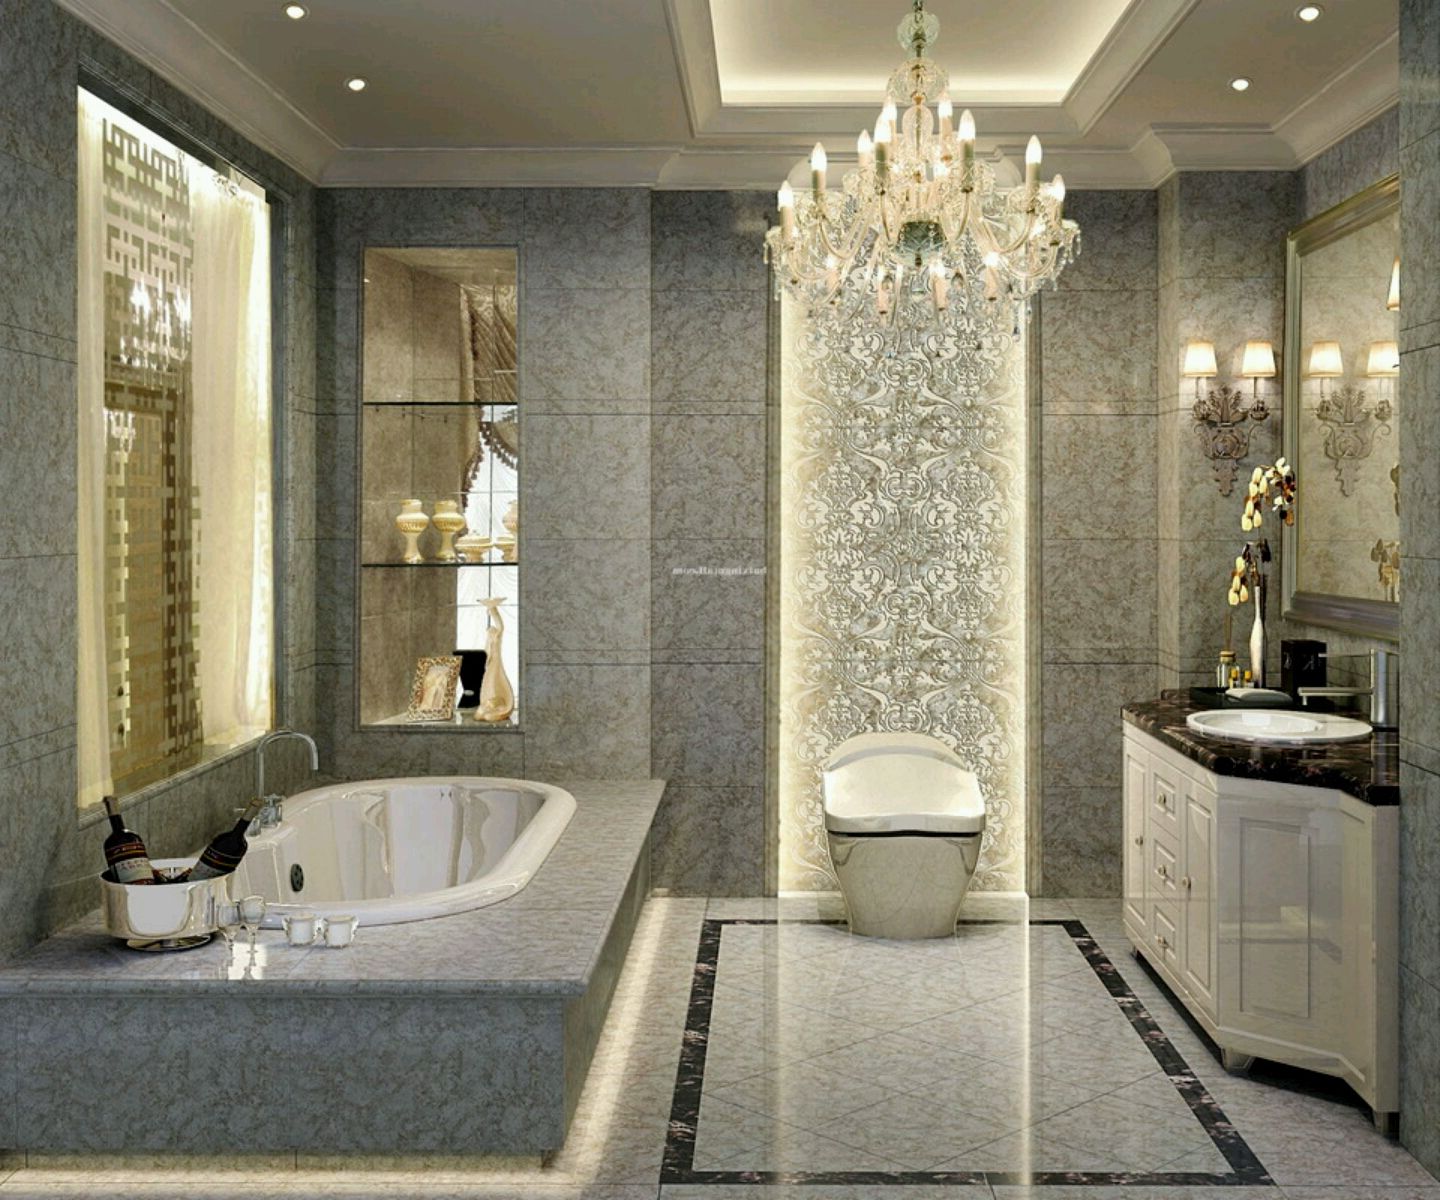 Bathroom Interior Design Ideas: Designing A Relaxing Retreat